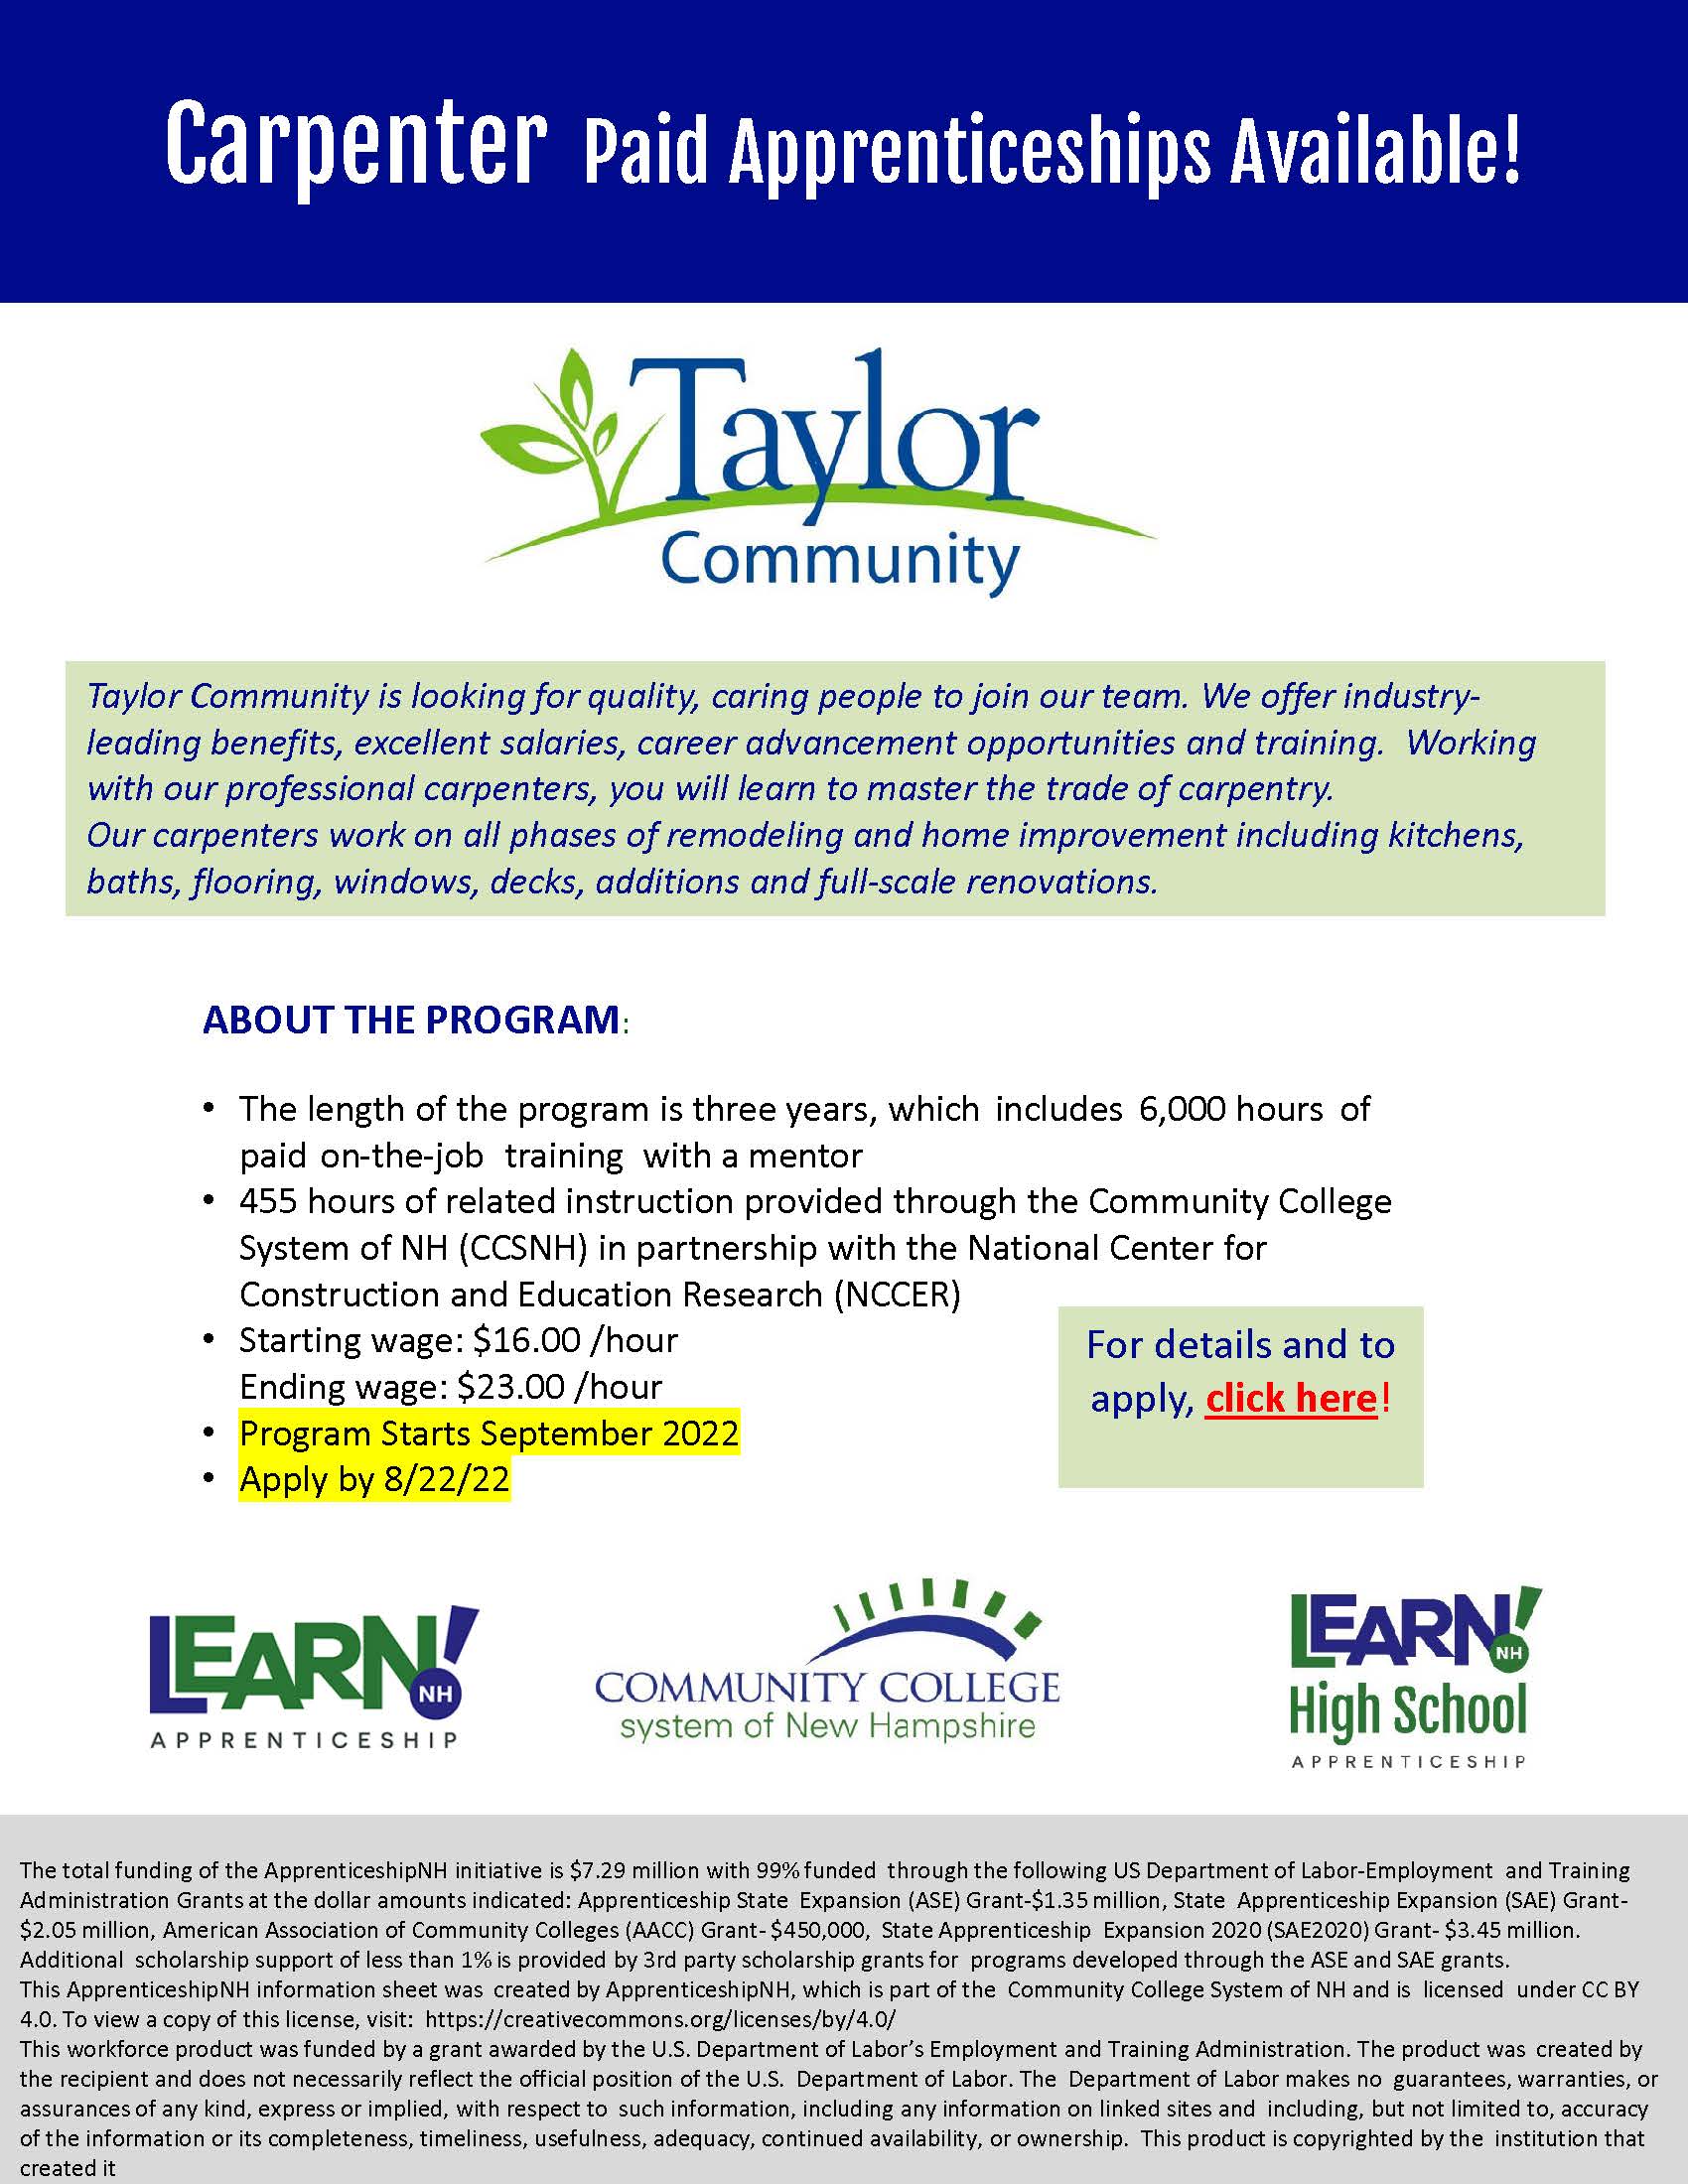 Taylor Community Apprenticeship